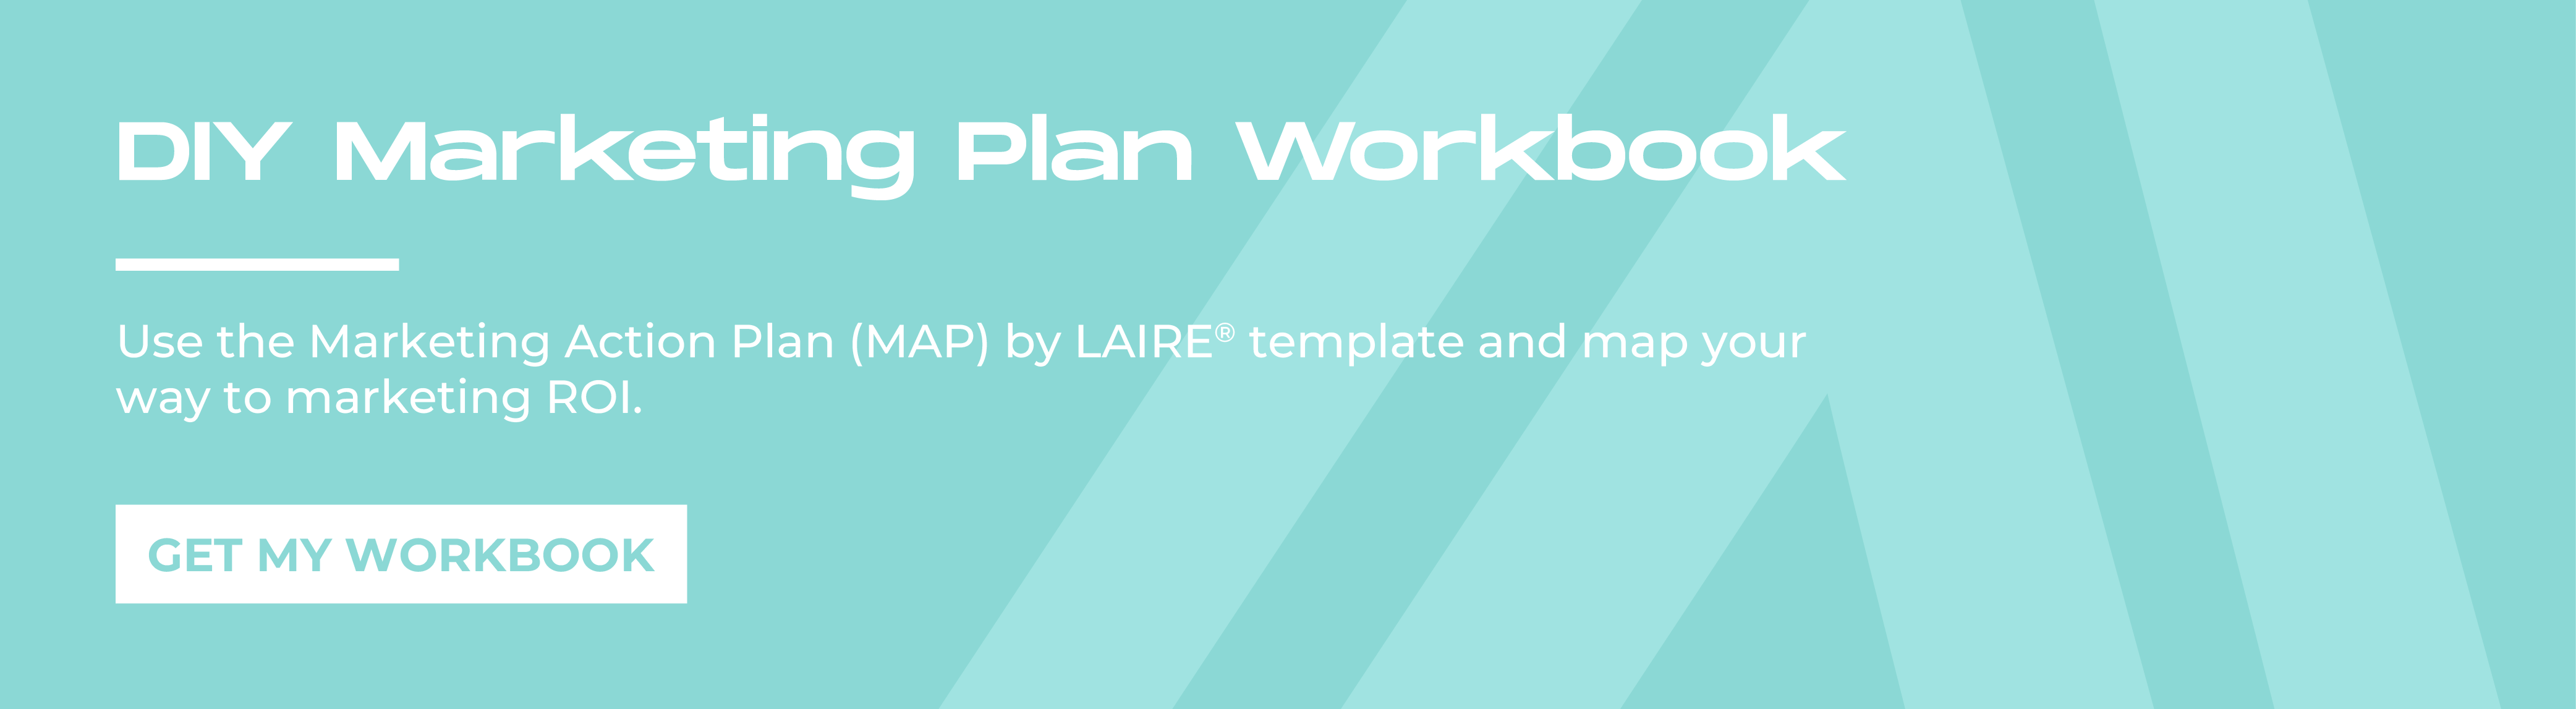 DIY Marketing Plan Workbook_Use the MAP template